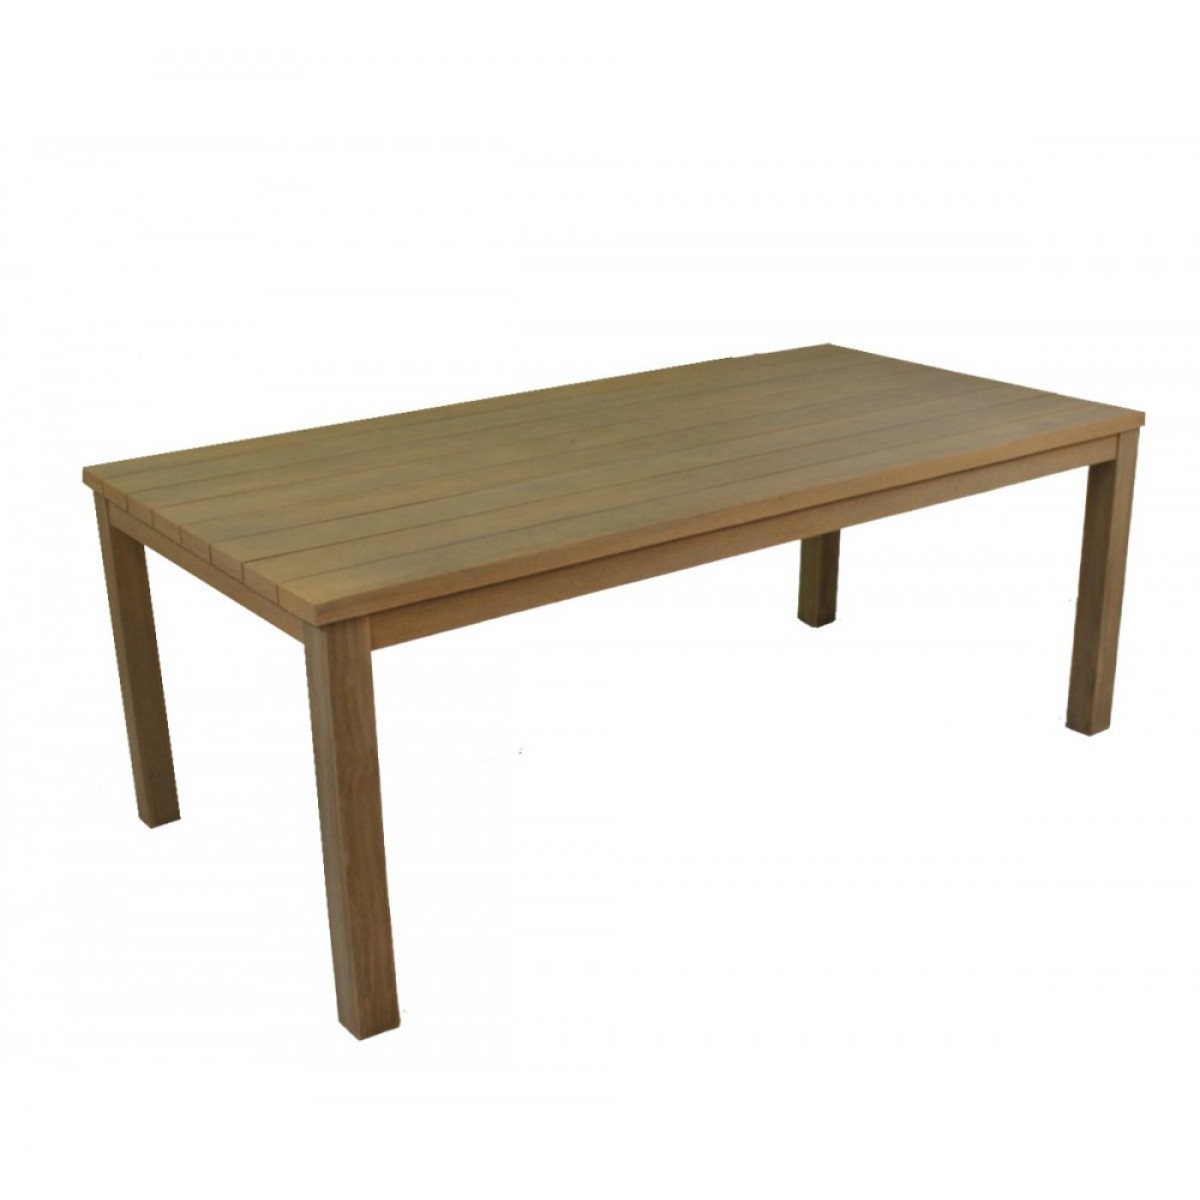 Garment τραπέζι από μασίφ ξύλο ευκάλυπτου 200x100x76 εκ